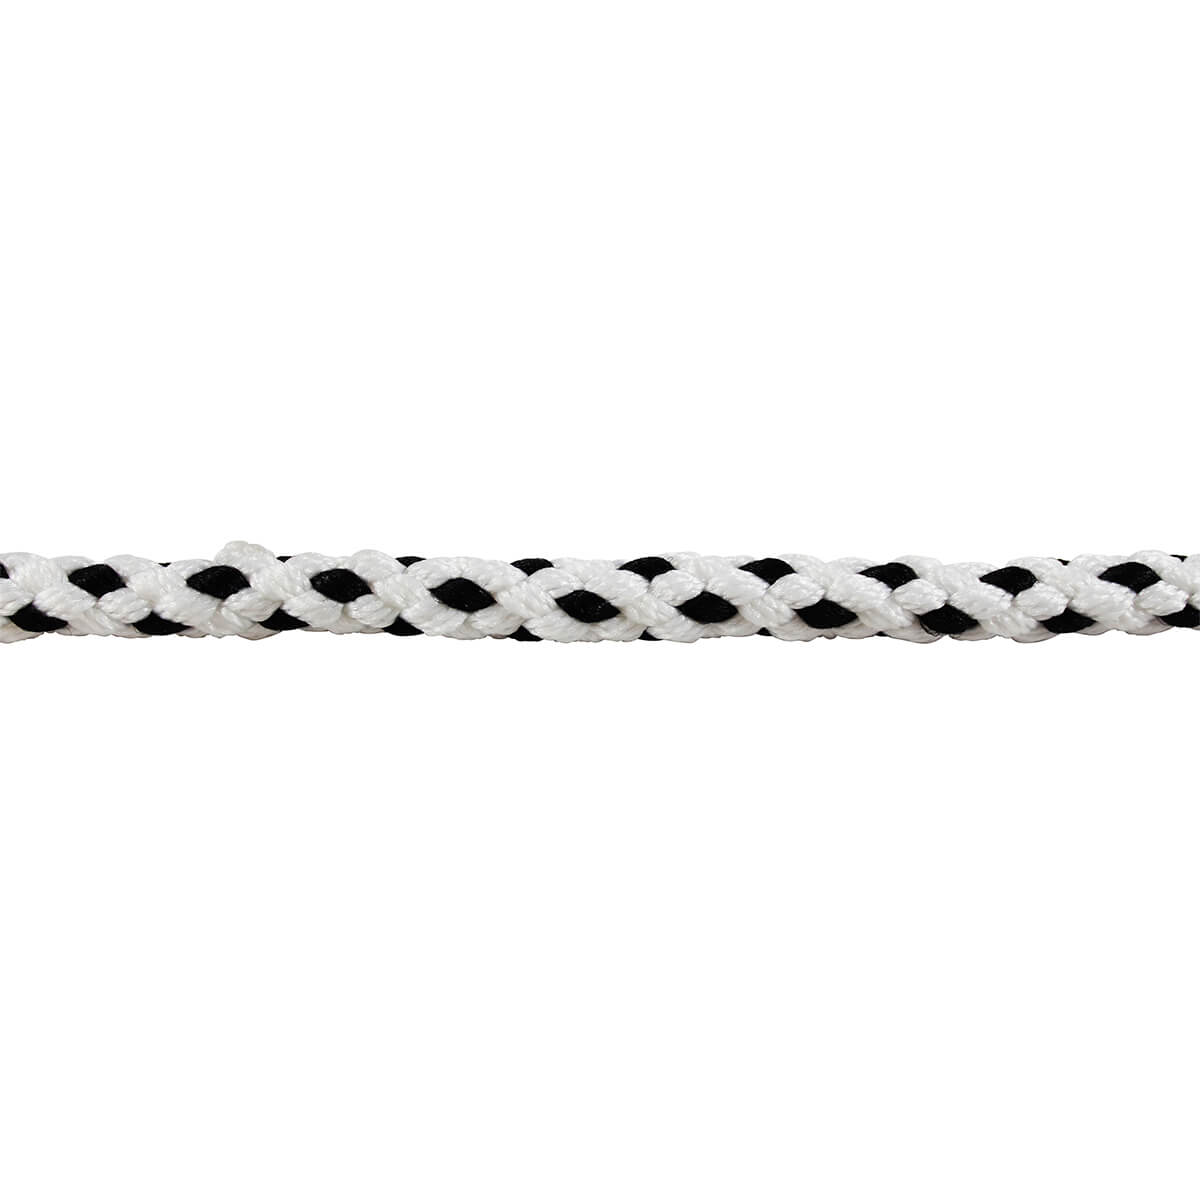 Nylon/Polyester Braided Rope - Black/White - 3/8-in - Price / ft